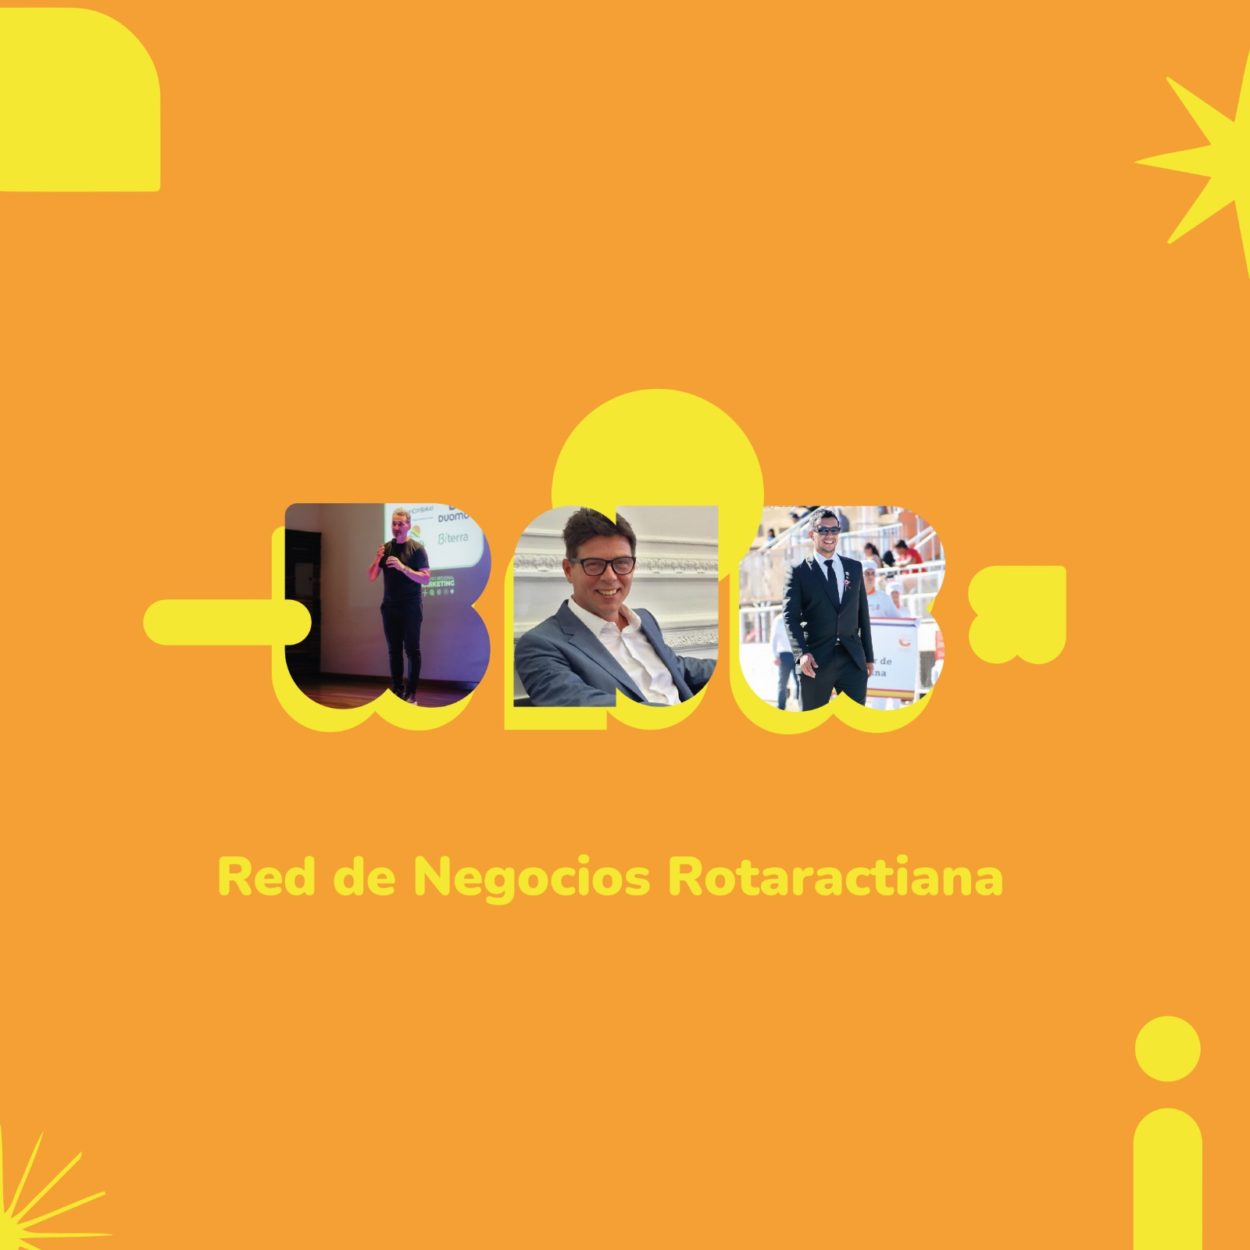 Emprendedurismo: invitan a participar del evento "Red de Negocios Rotaractiana" imagen-1